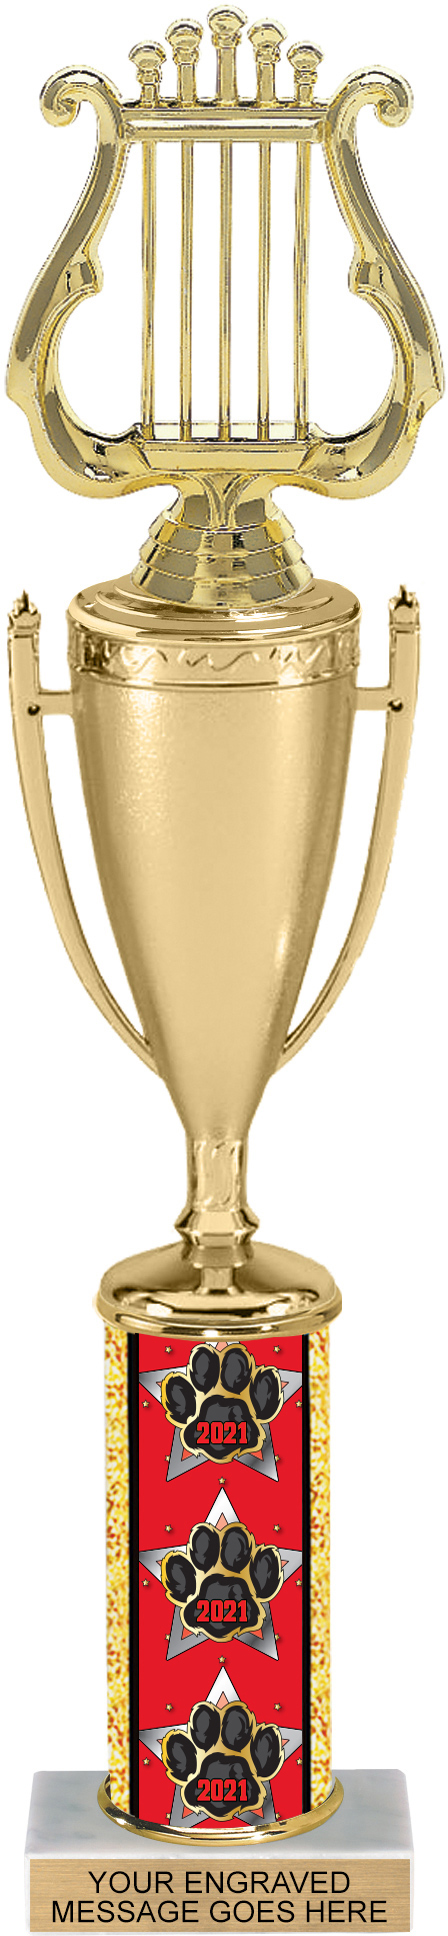 Paw Year Column Cup Trophy - 15 inch